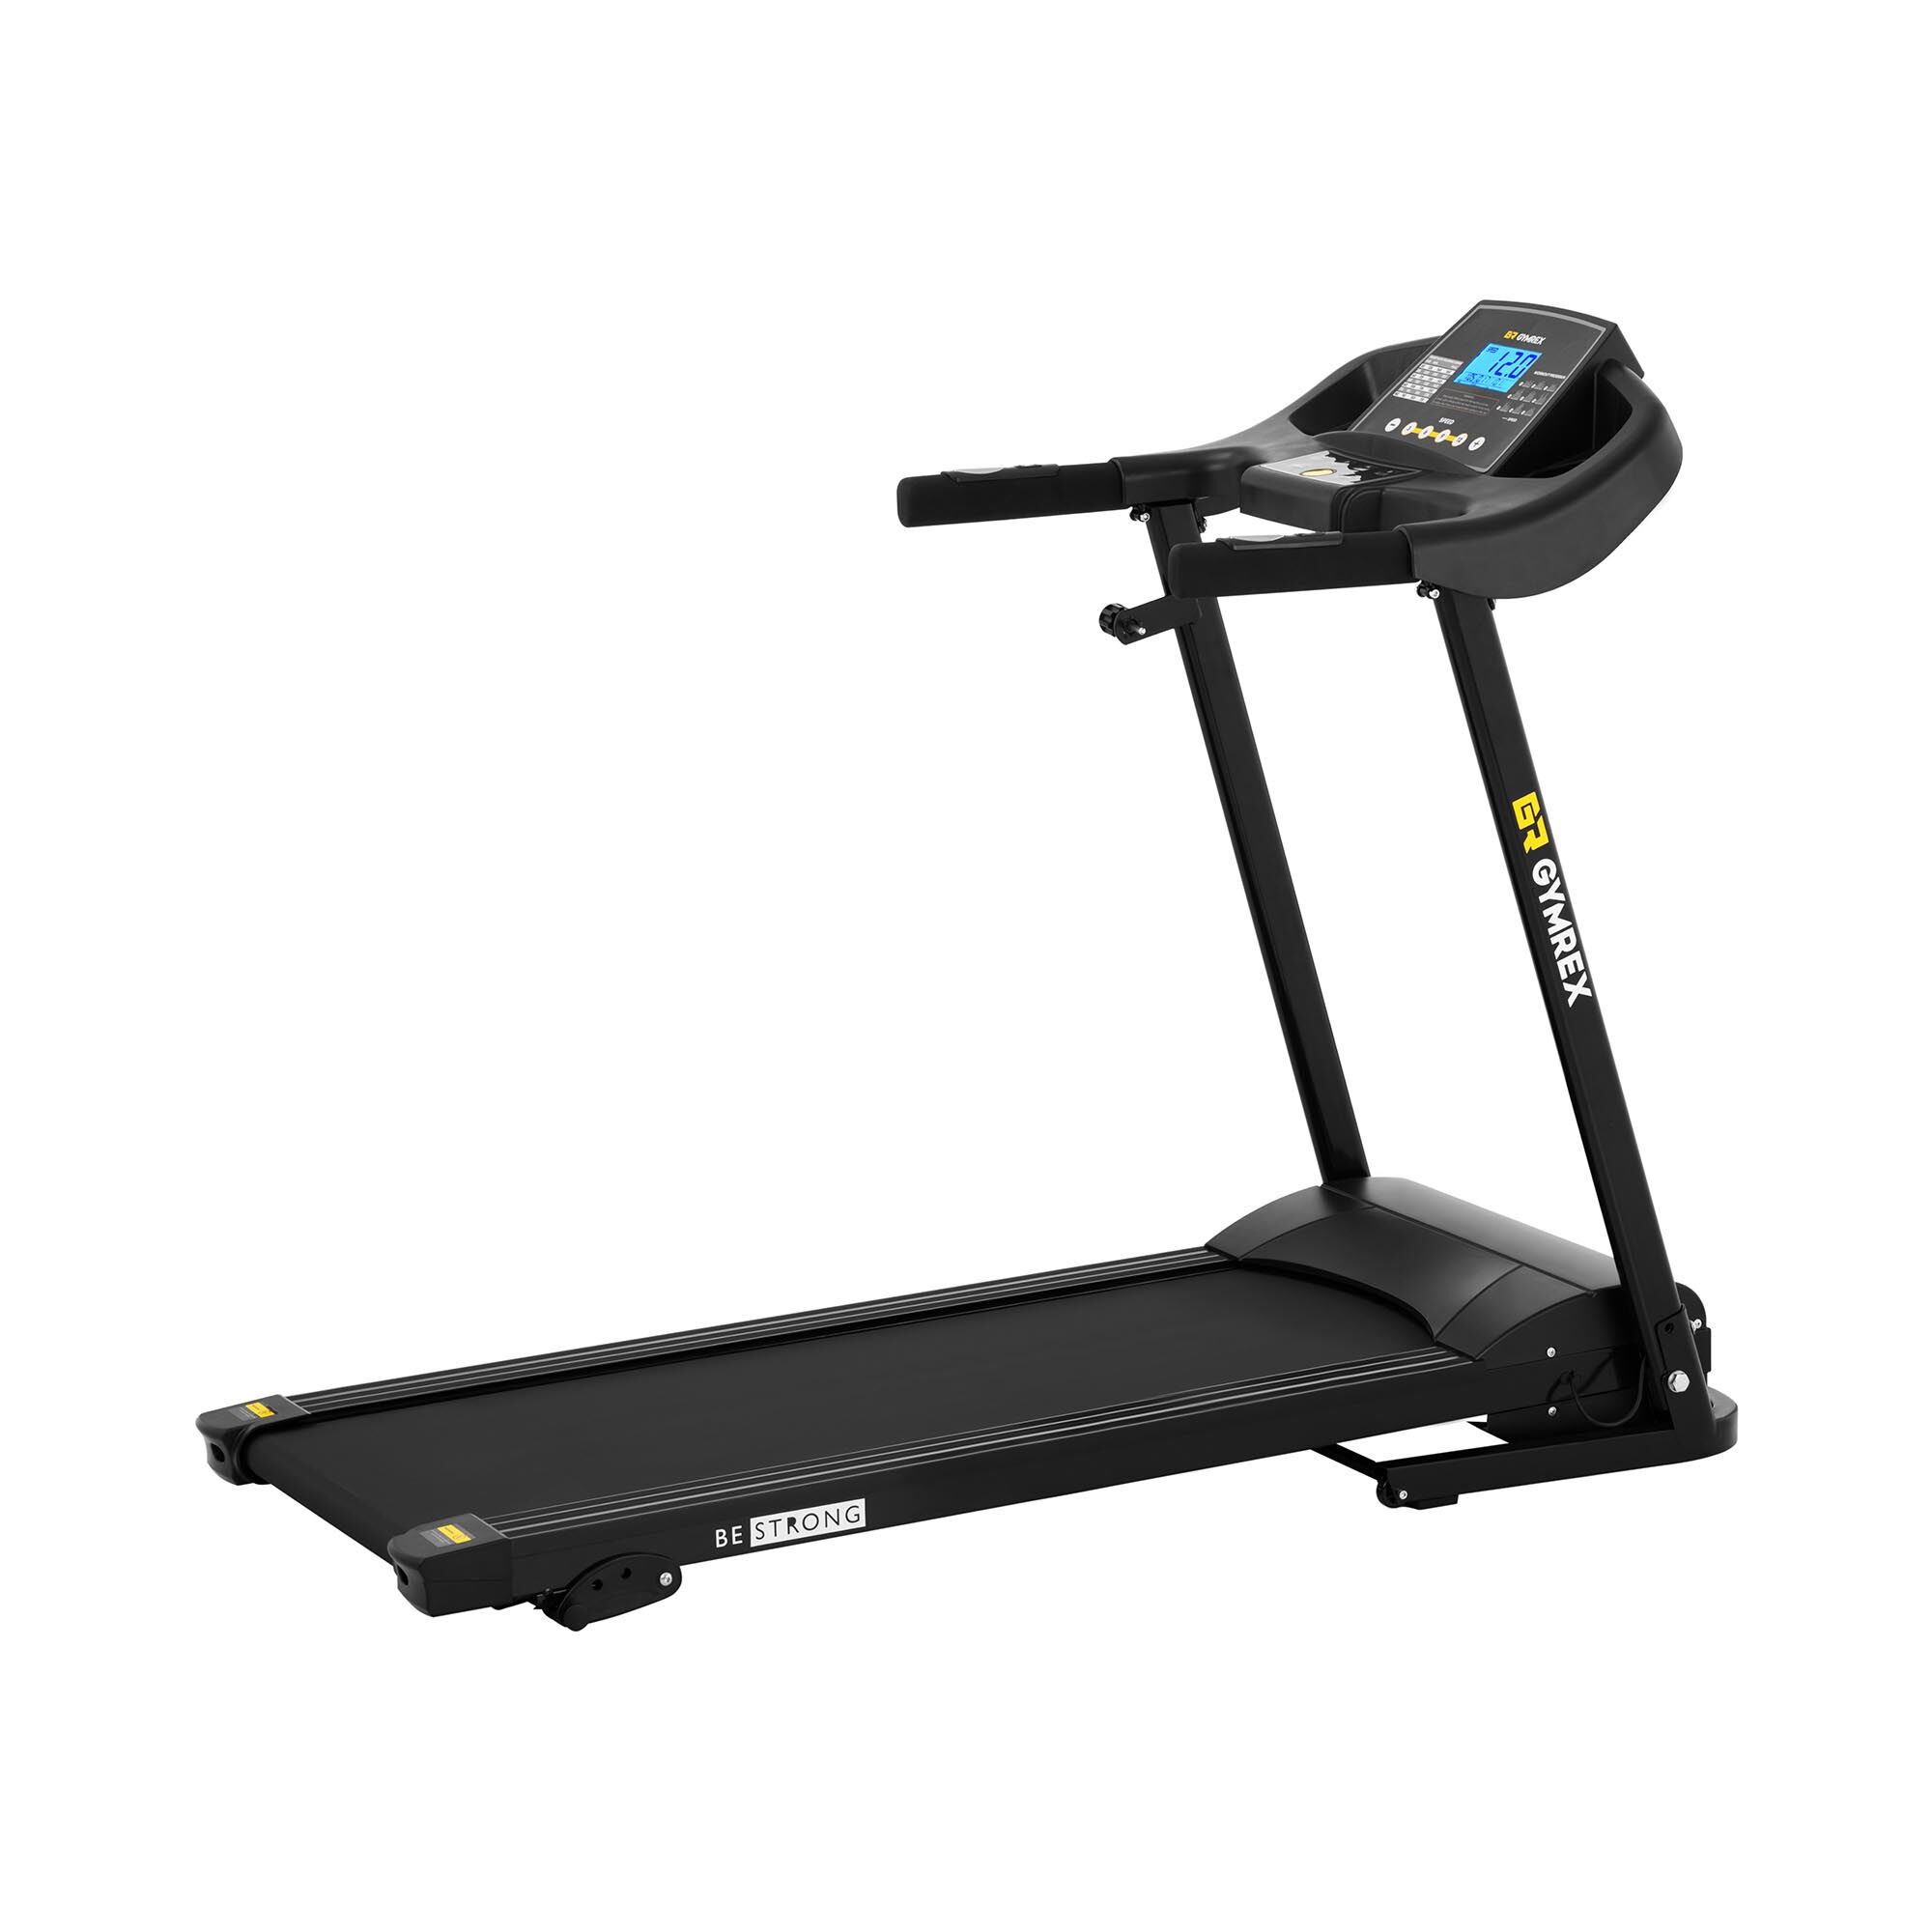 Gymrex Treadmill - folding - 1,200 W - 1 to 12 km/h - 120 kg - 3 incline levels